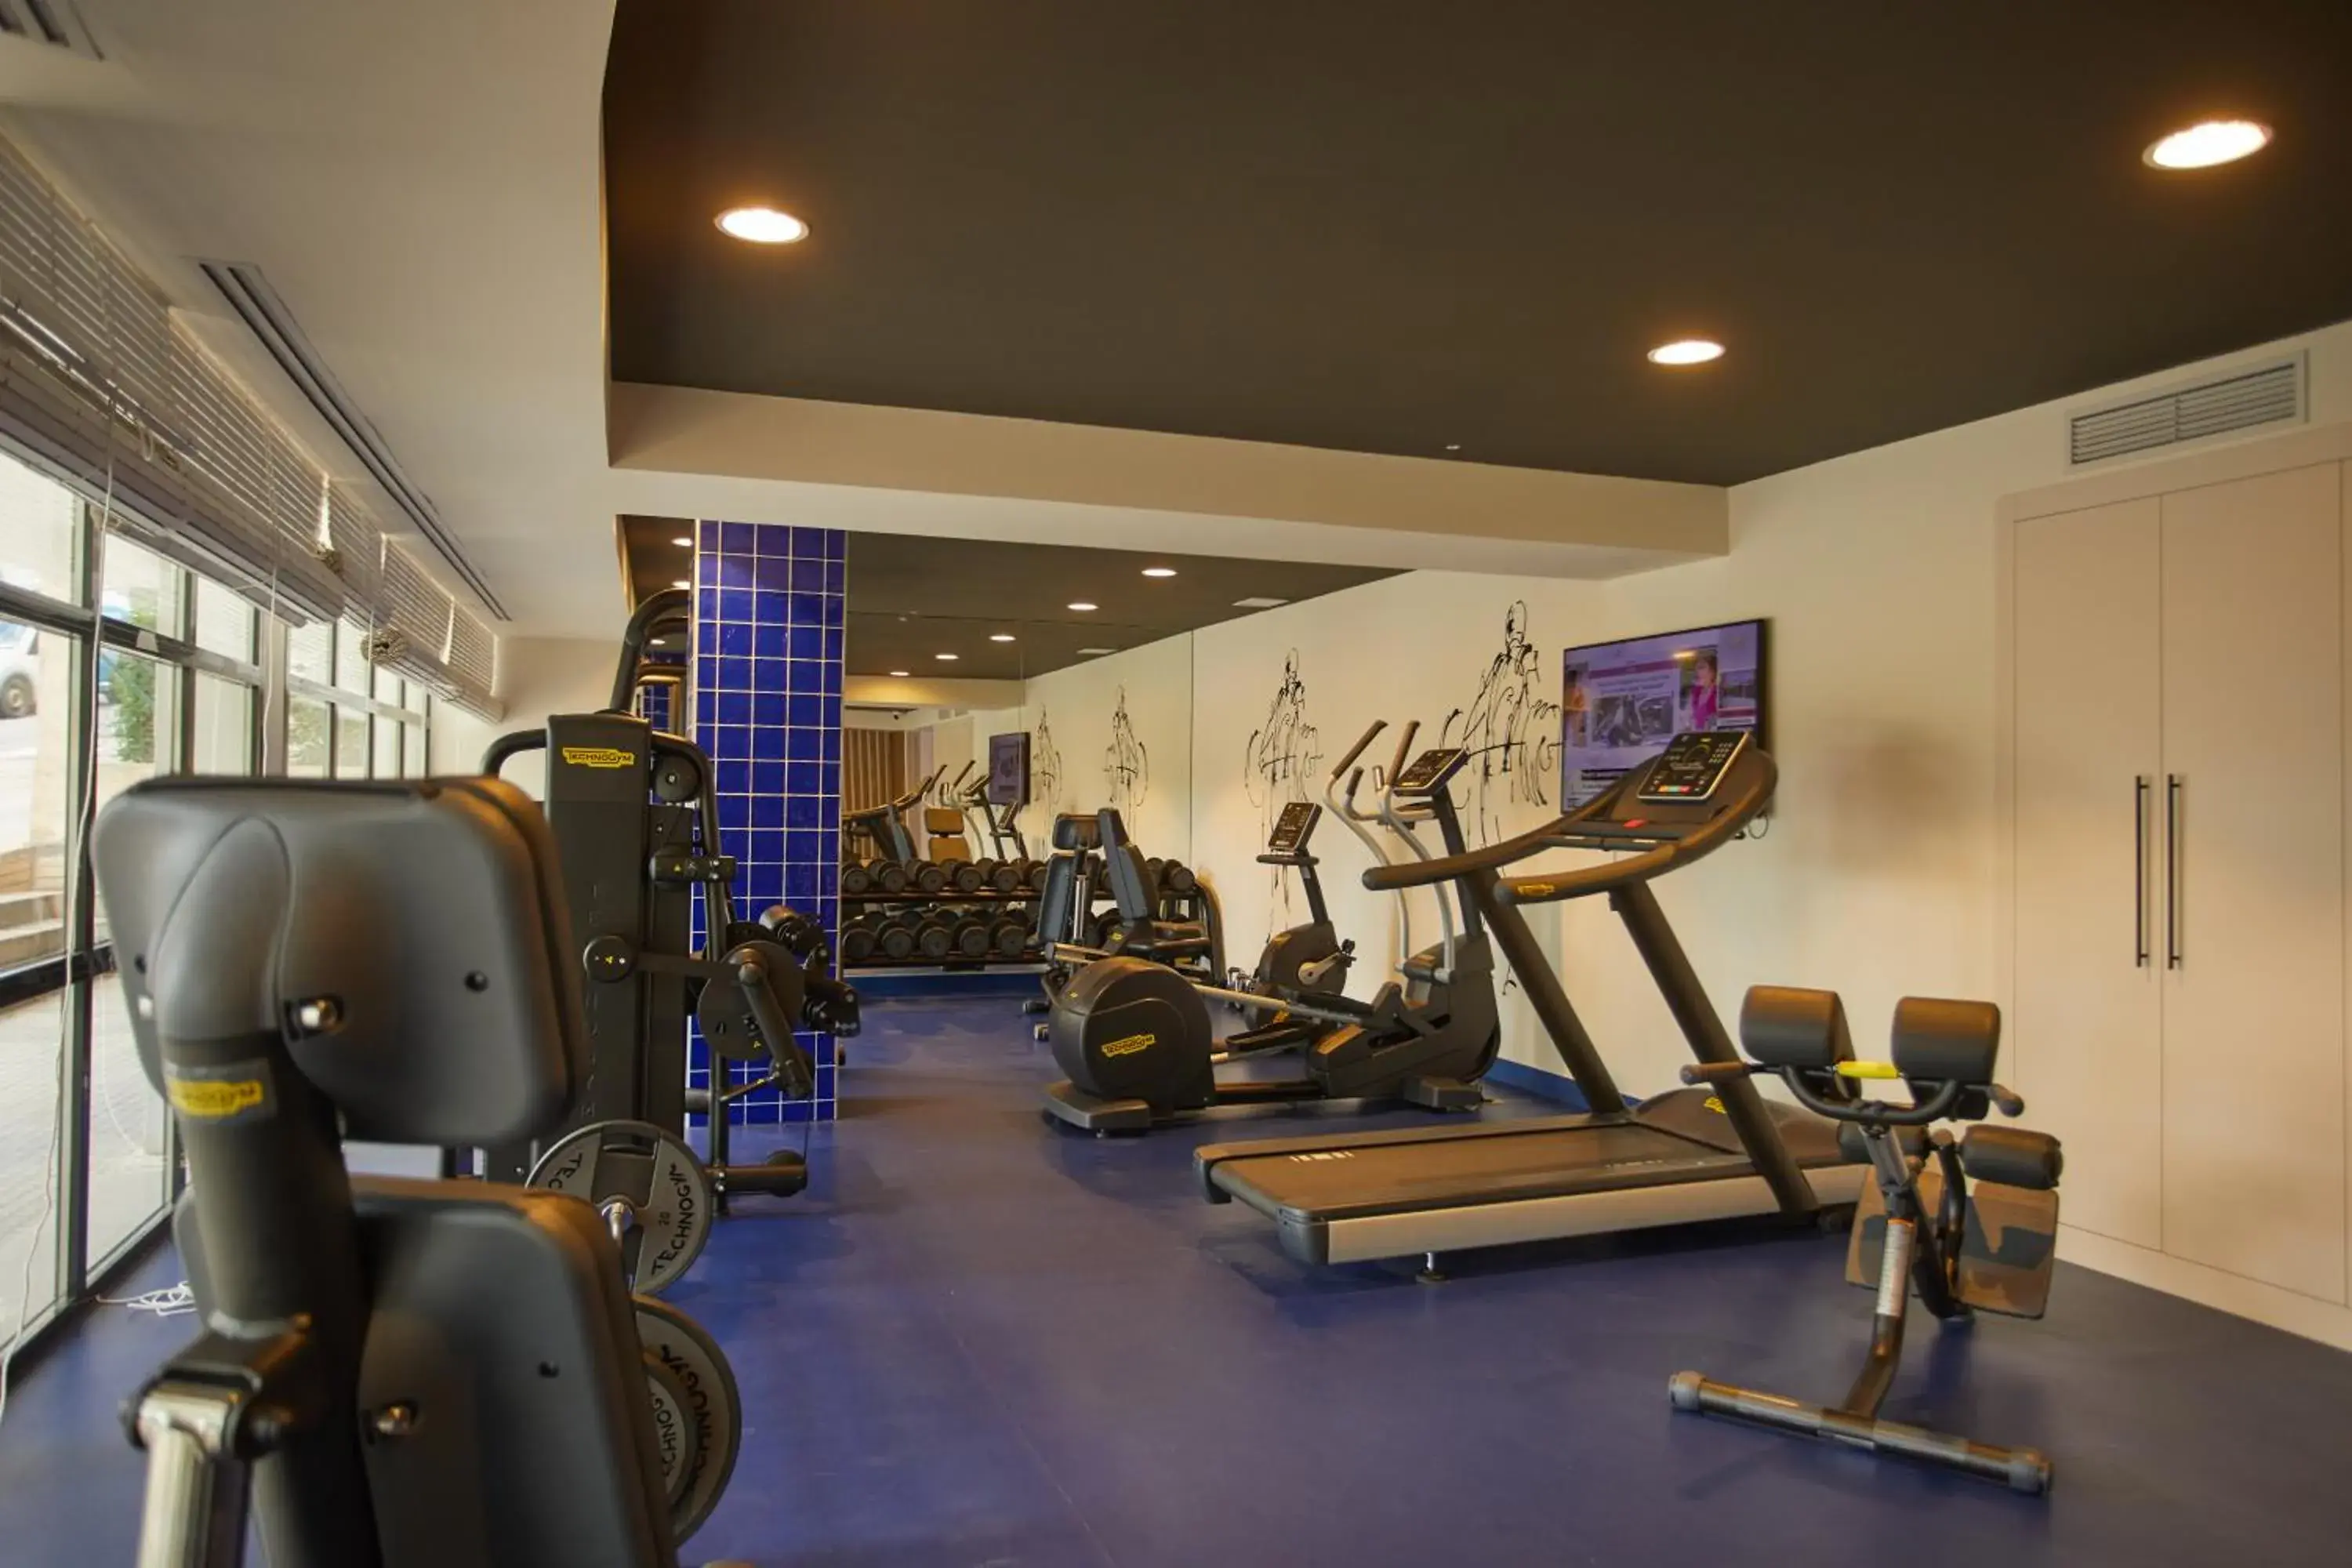 Fitness centre/facilities, Fitness Center/Facilities in Dreams Calvia Mallorca